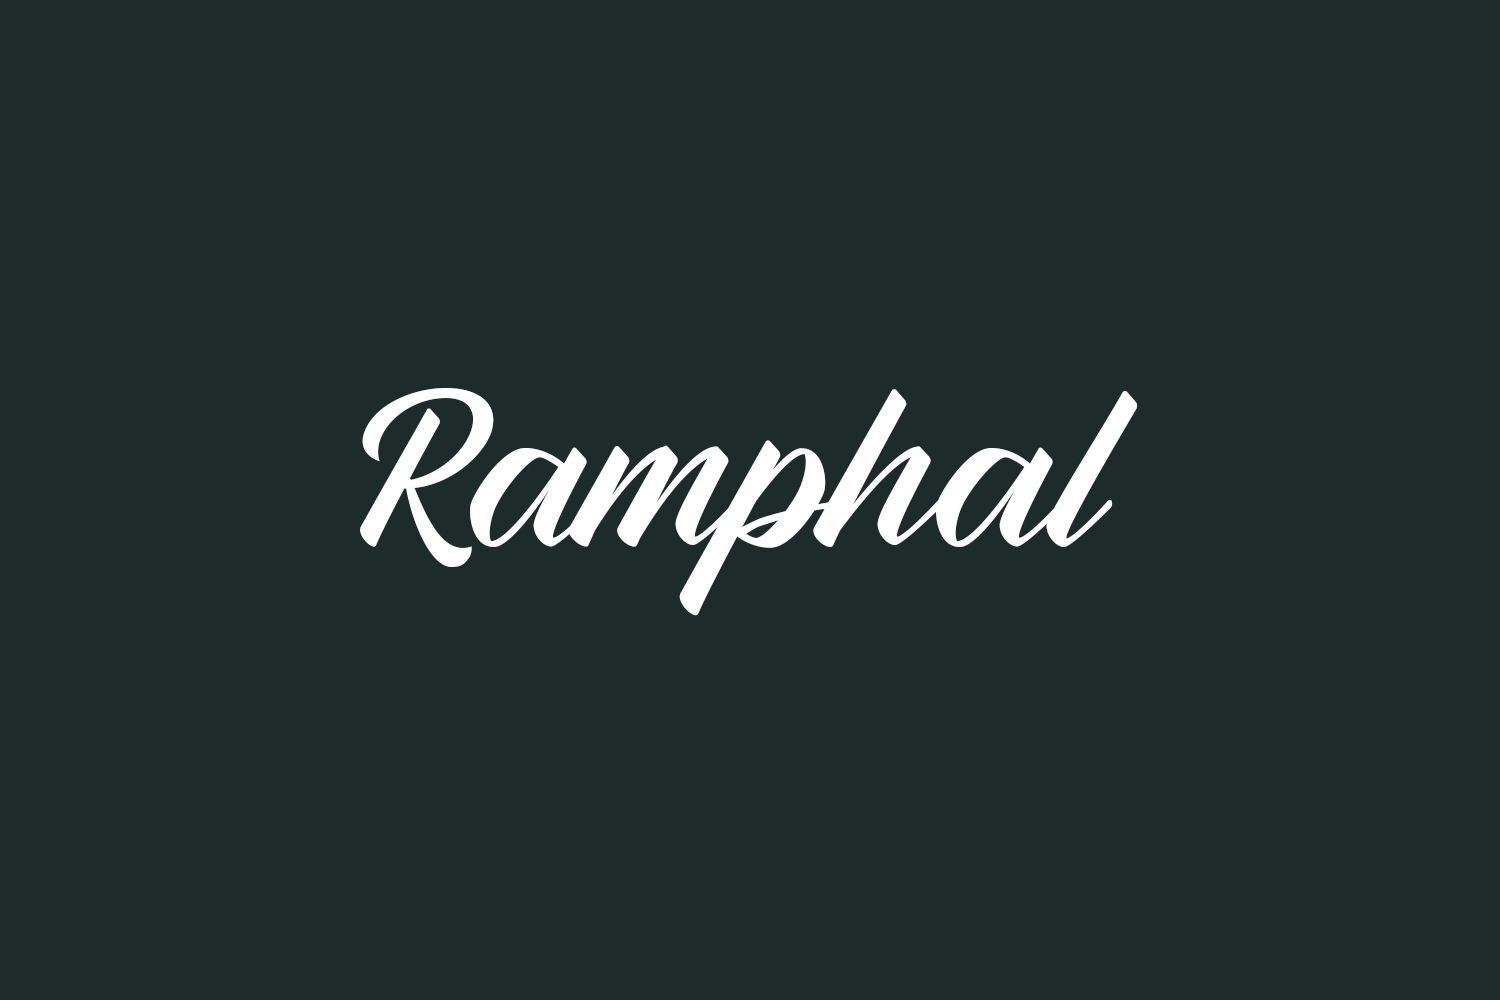 Ramphal Free Font